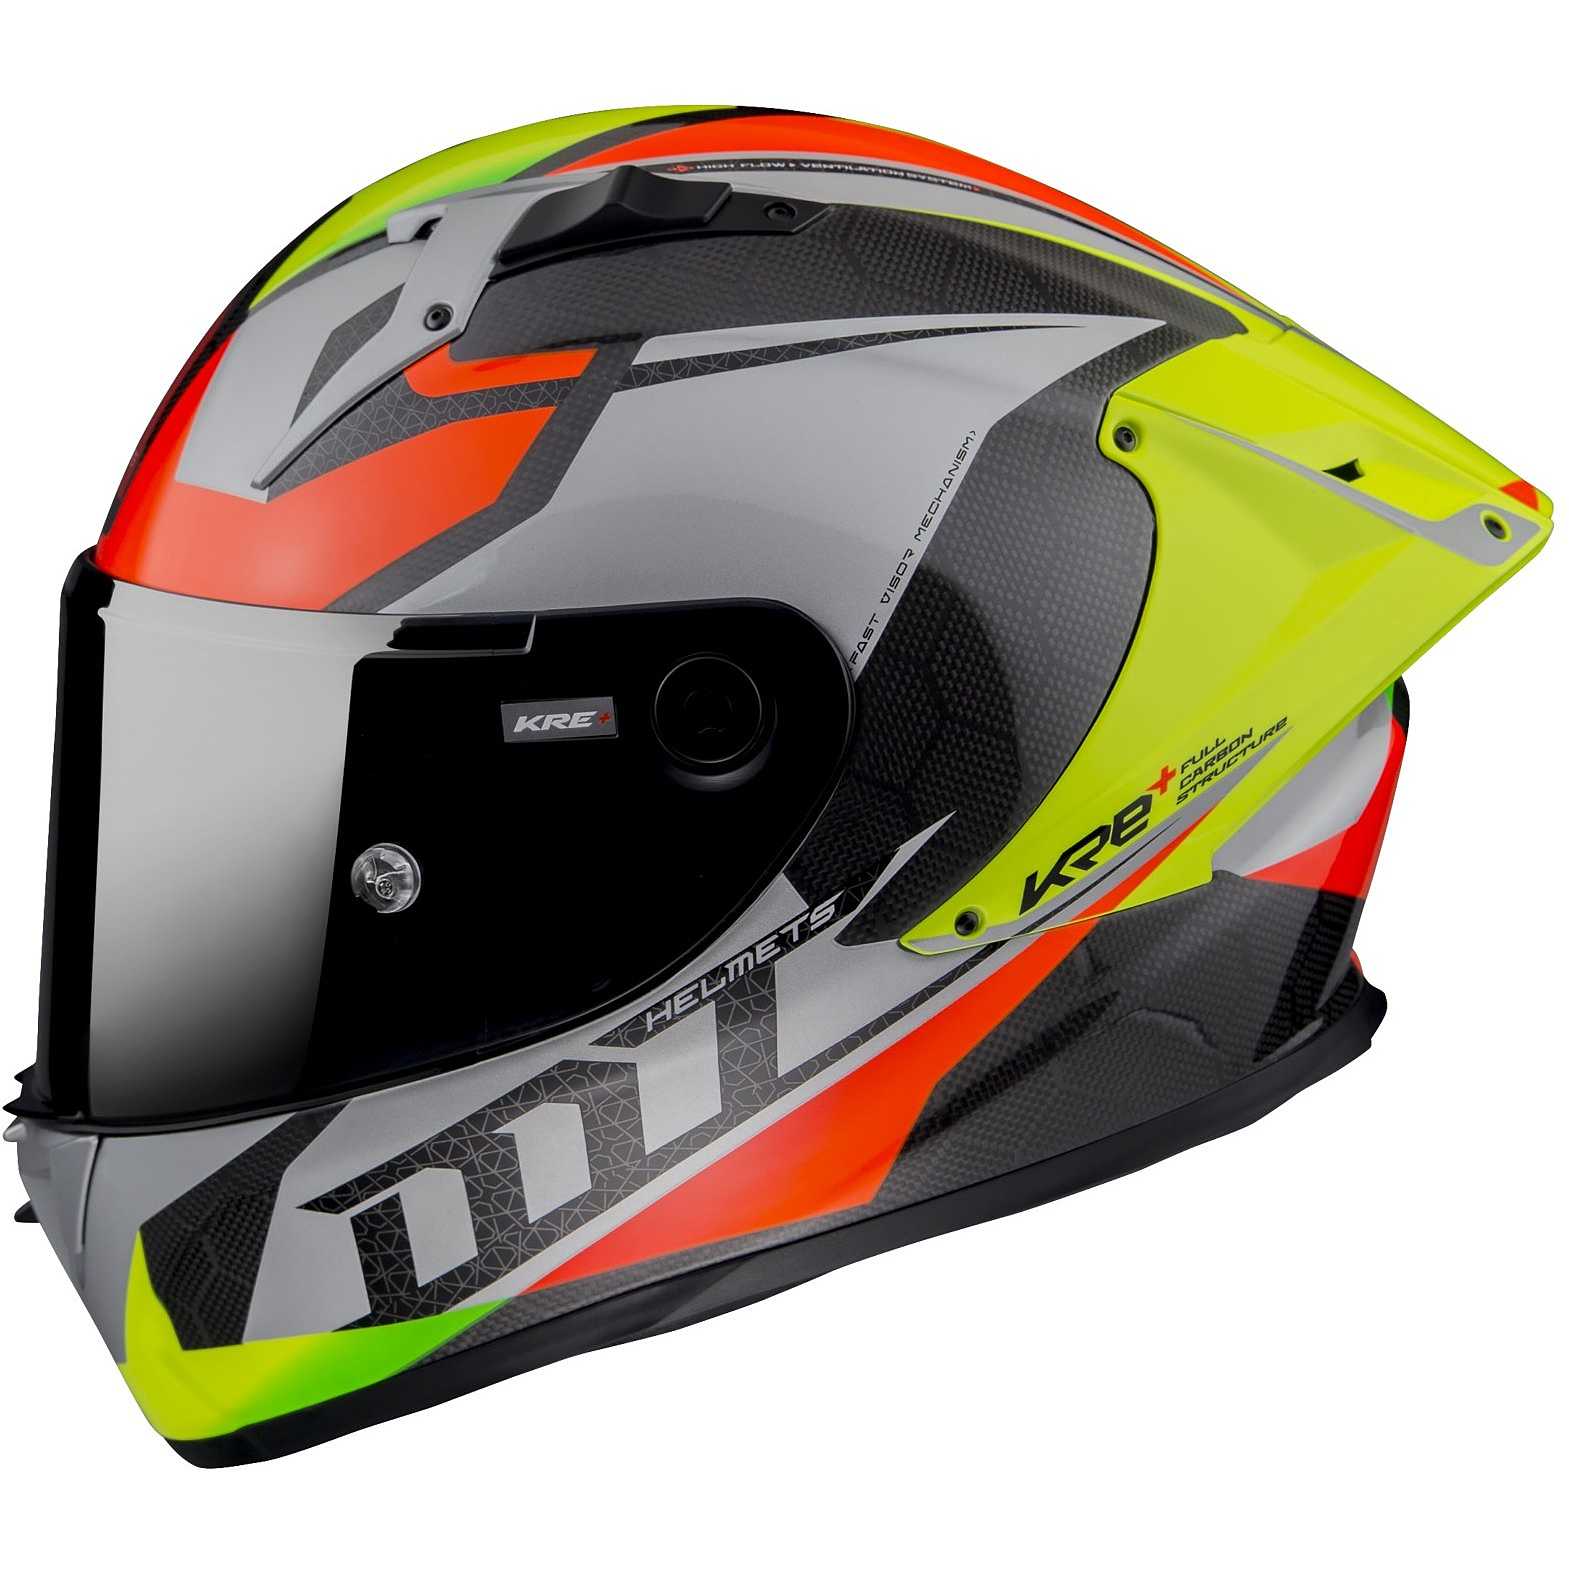 Integral Motorcycle Helmet Racing Mt Helmet KRE + CARBON PROJECTILE D2  Glossy Gray For Sale Online 